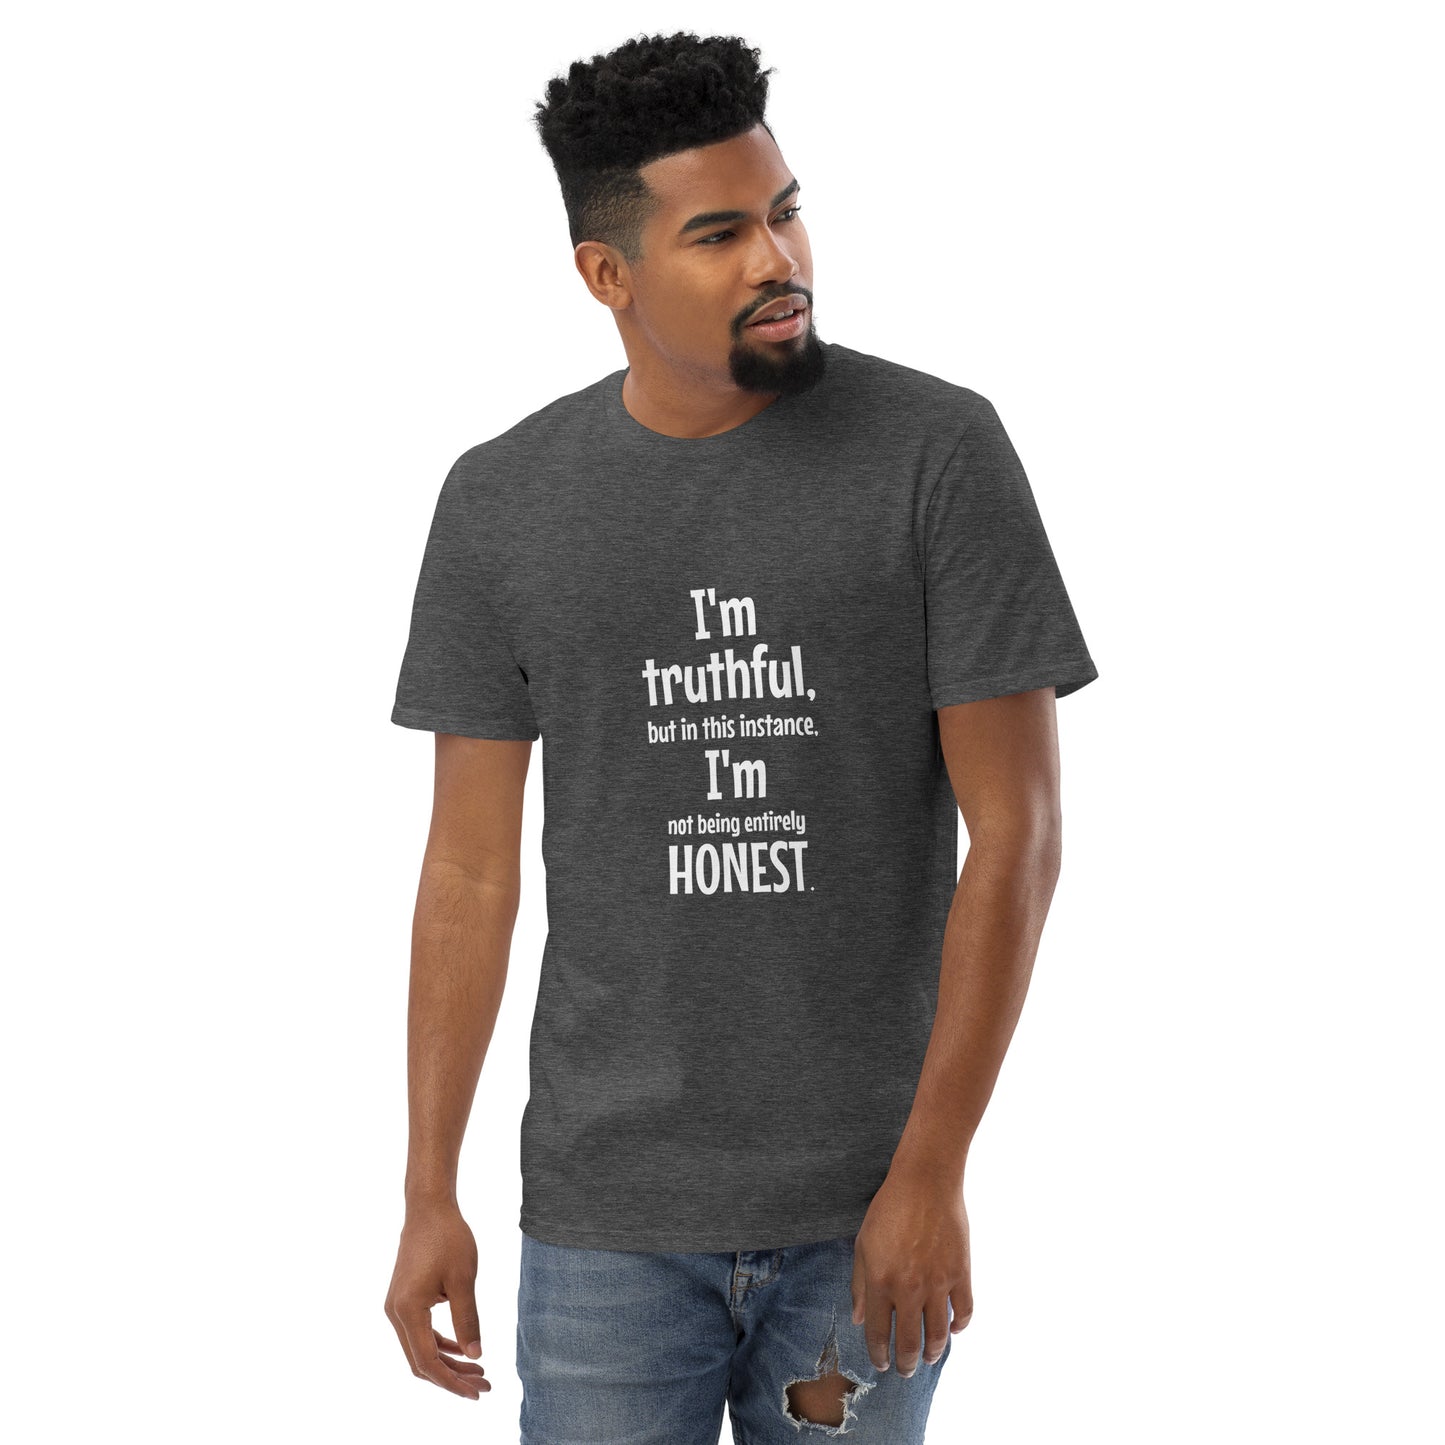 I'm truthful, I'm honest - Men's T-Shirt